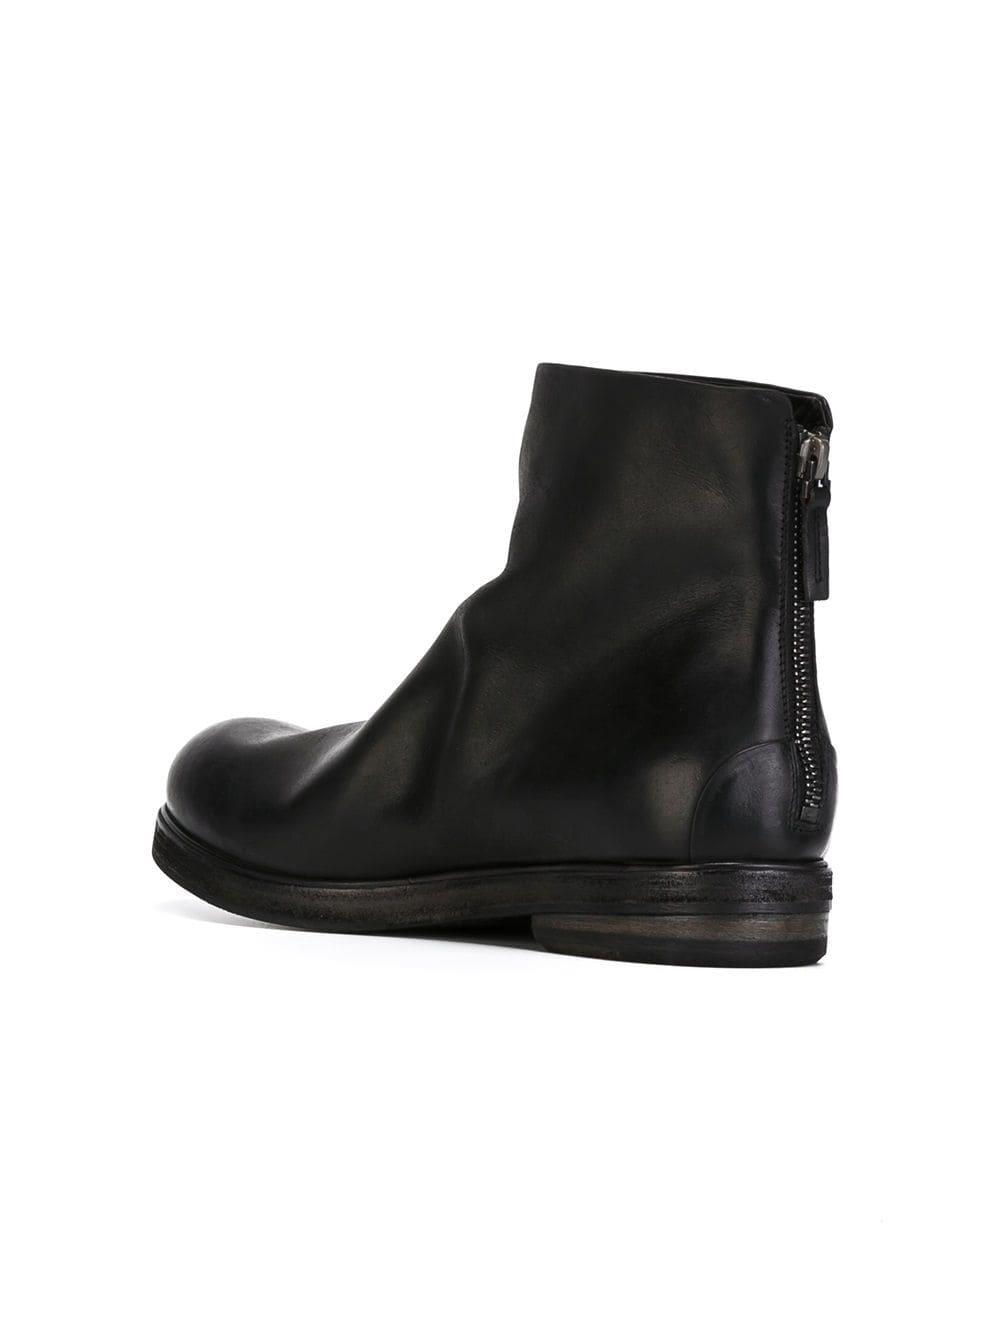 Lyst - Marsèll Back Zip Boots in Black